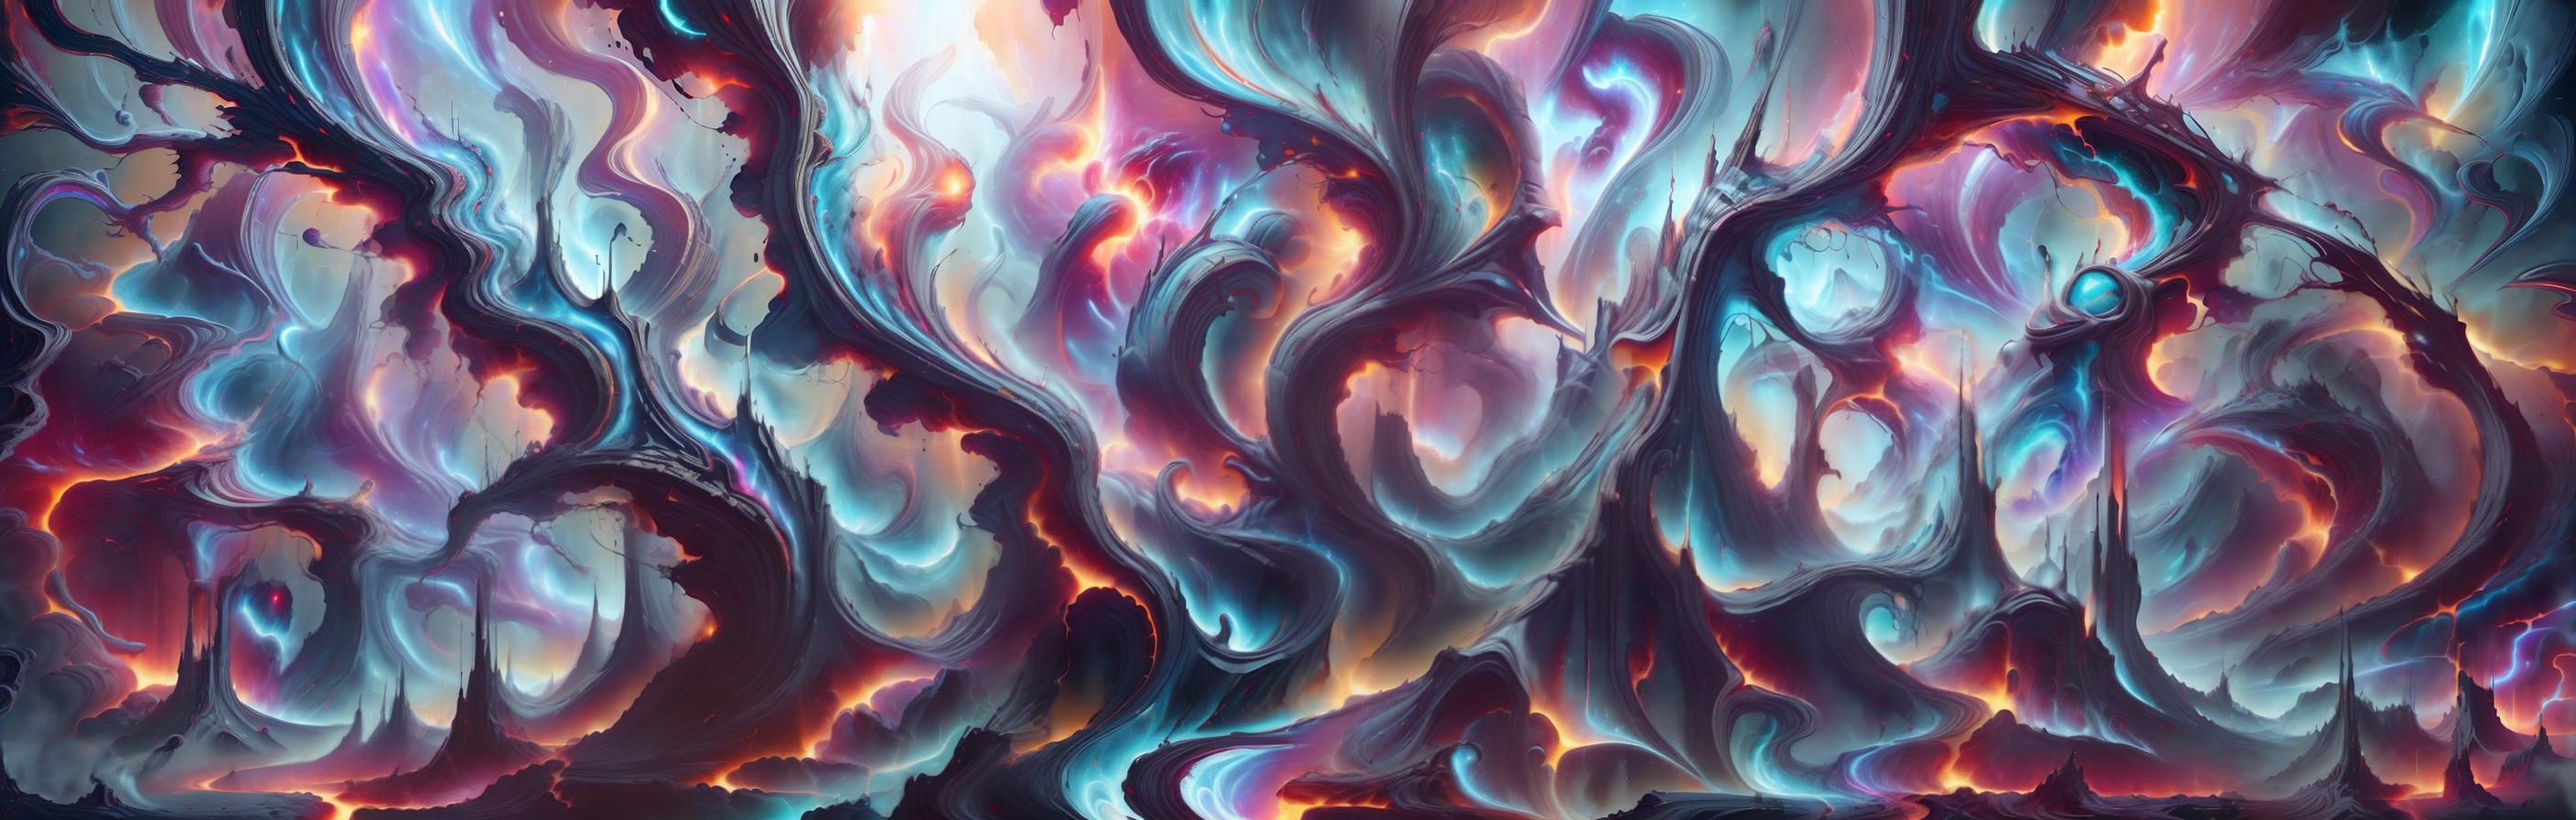 Magma Tech - World Morph image by luminousdragon